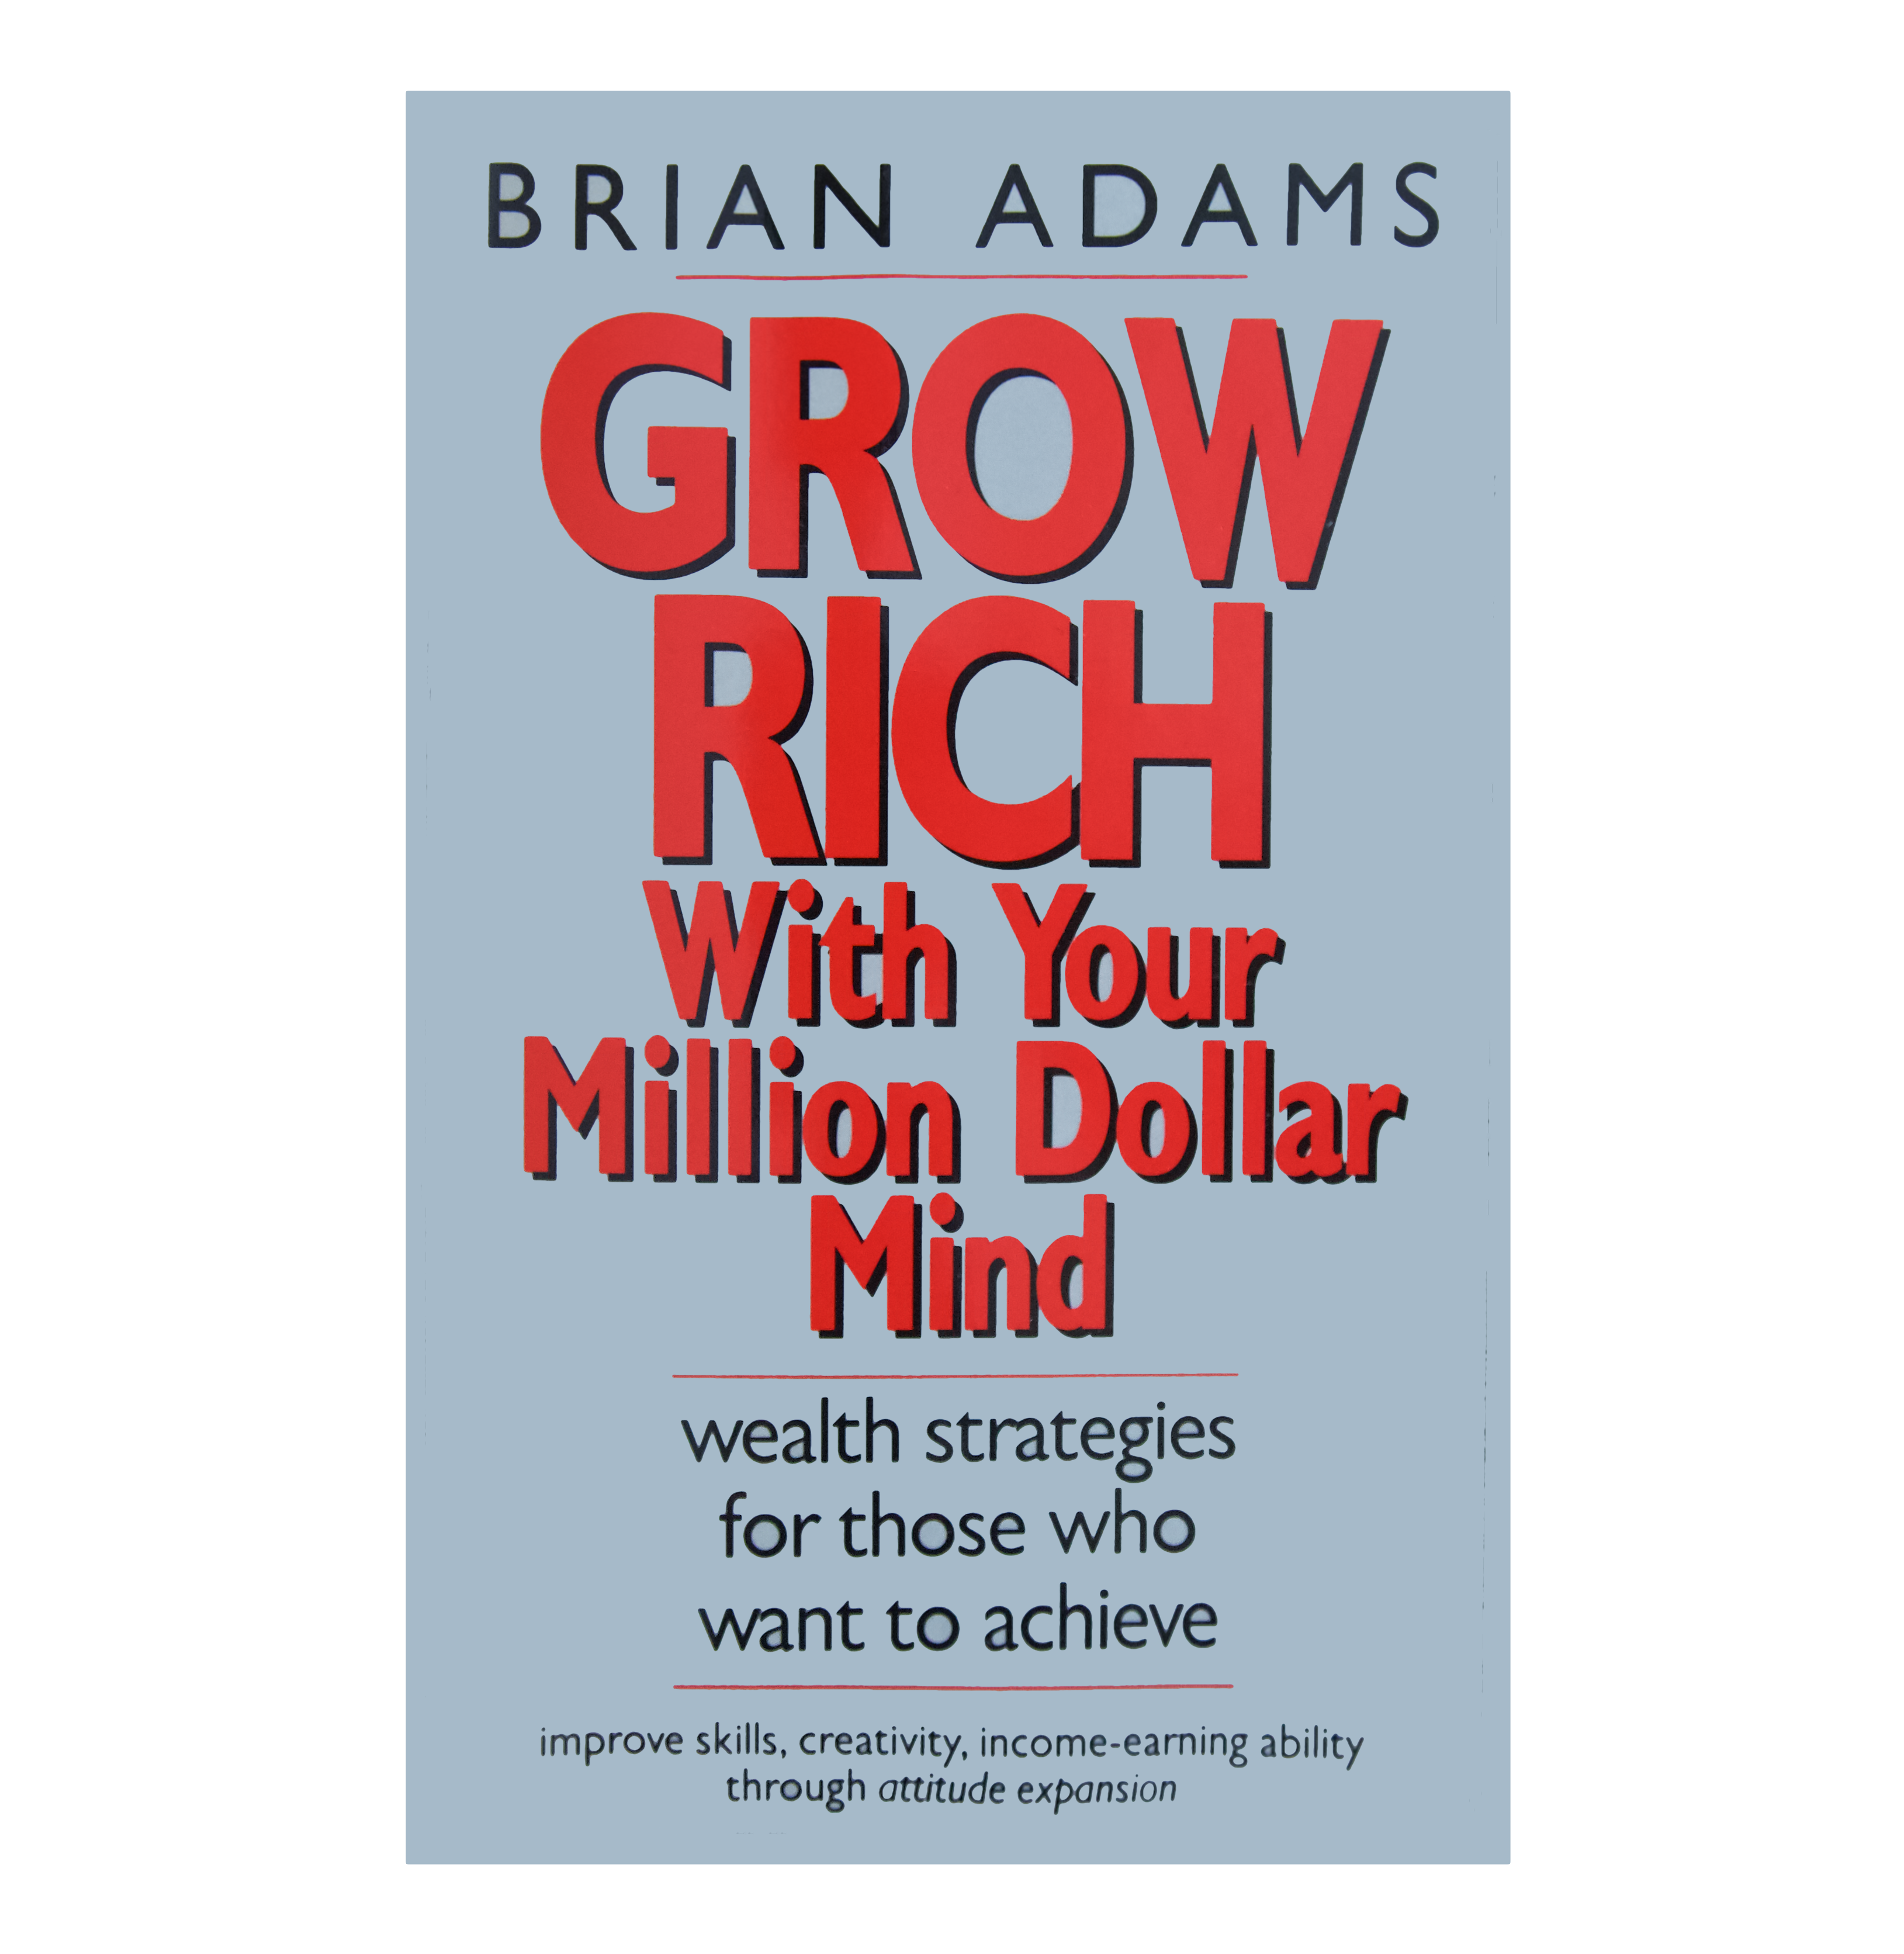 BRIAN ADAMS - GROW RICH WITH YOUR MILLION DOLLAR MIND